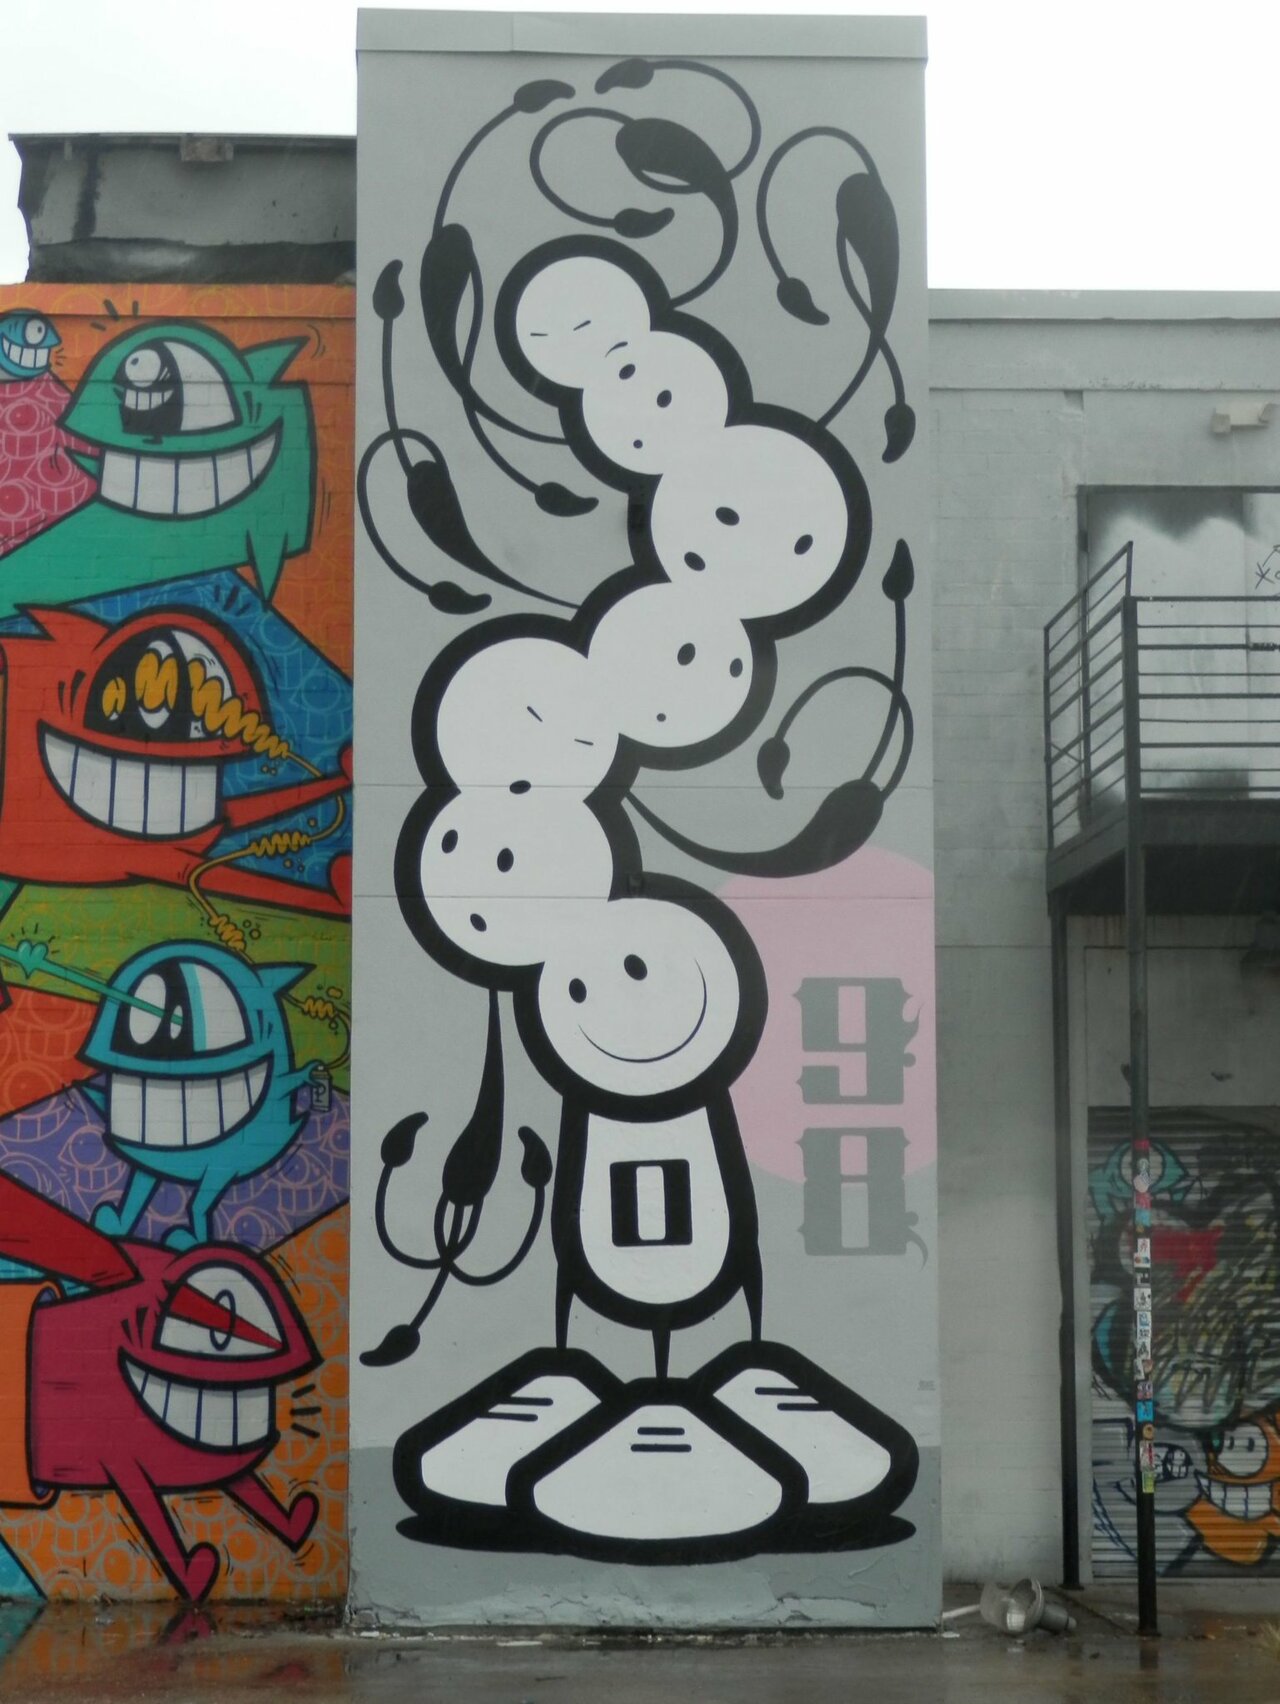 #Houston #Graffiti I felt humble when I finally located this #HueFestival #Streetart by London Police. https://t.co/JfHhDDm4WP